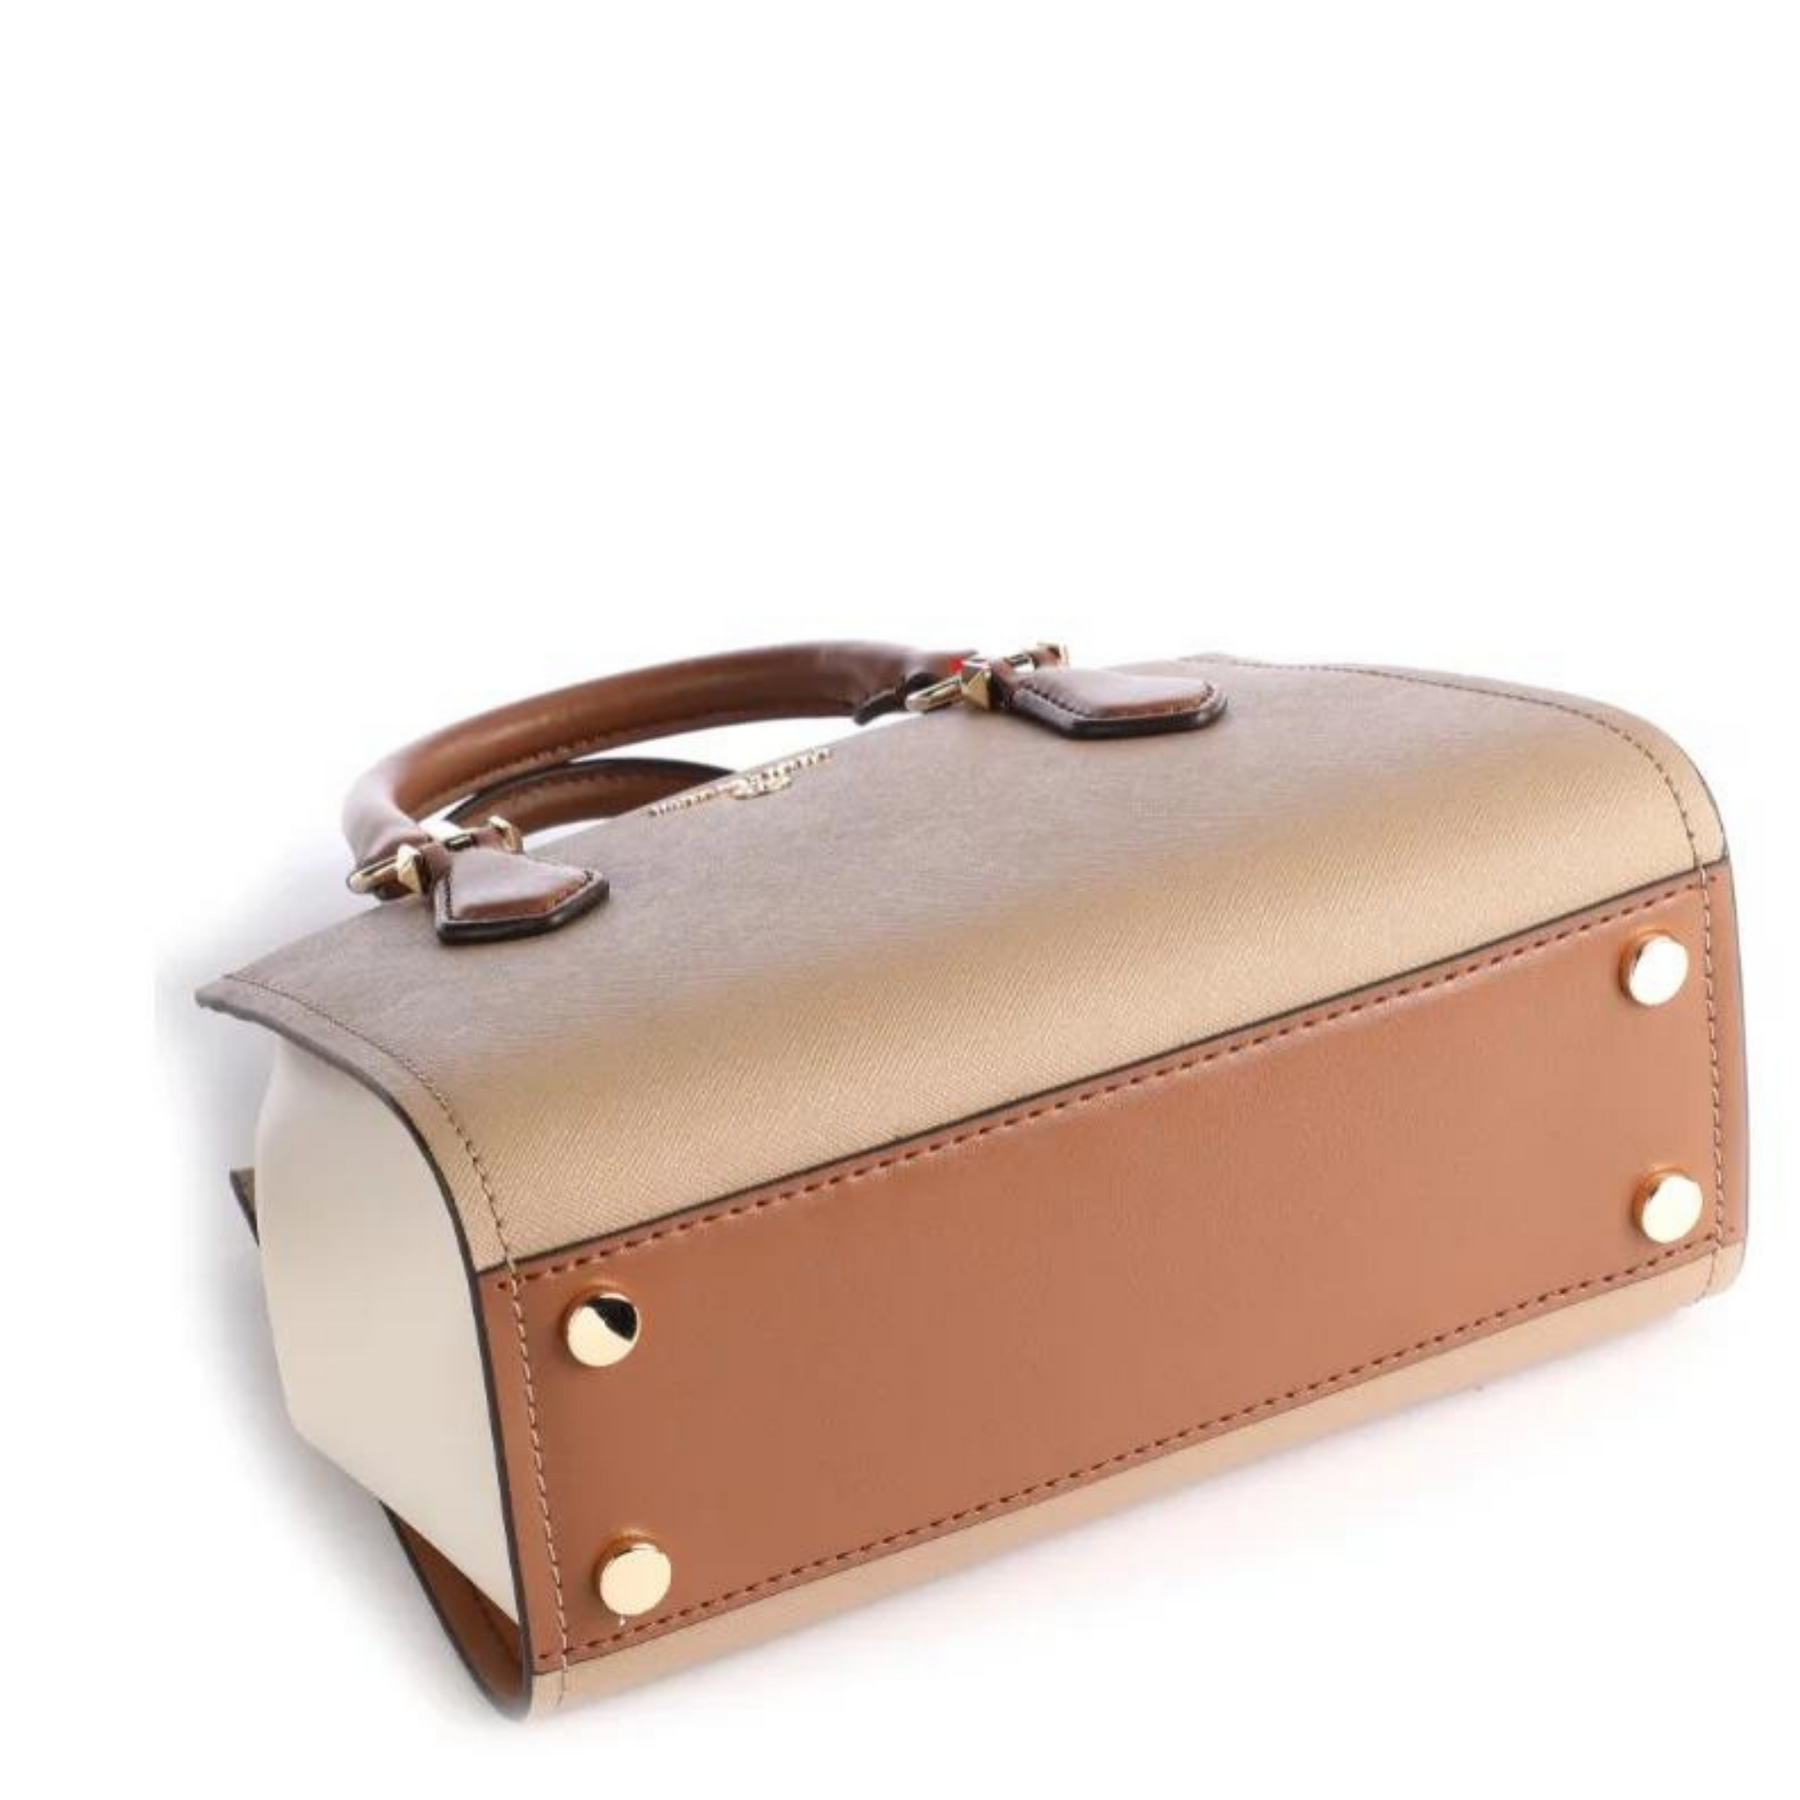 Michael Kors MARILYN Handbag in Camel, Tan And Cream Crossbody